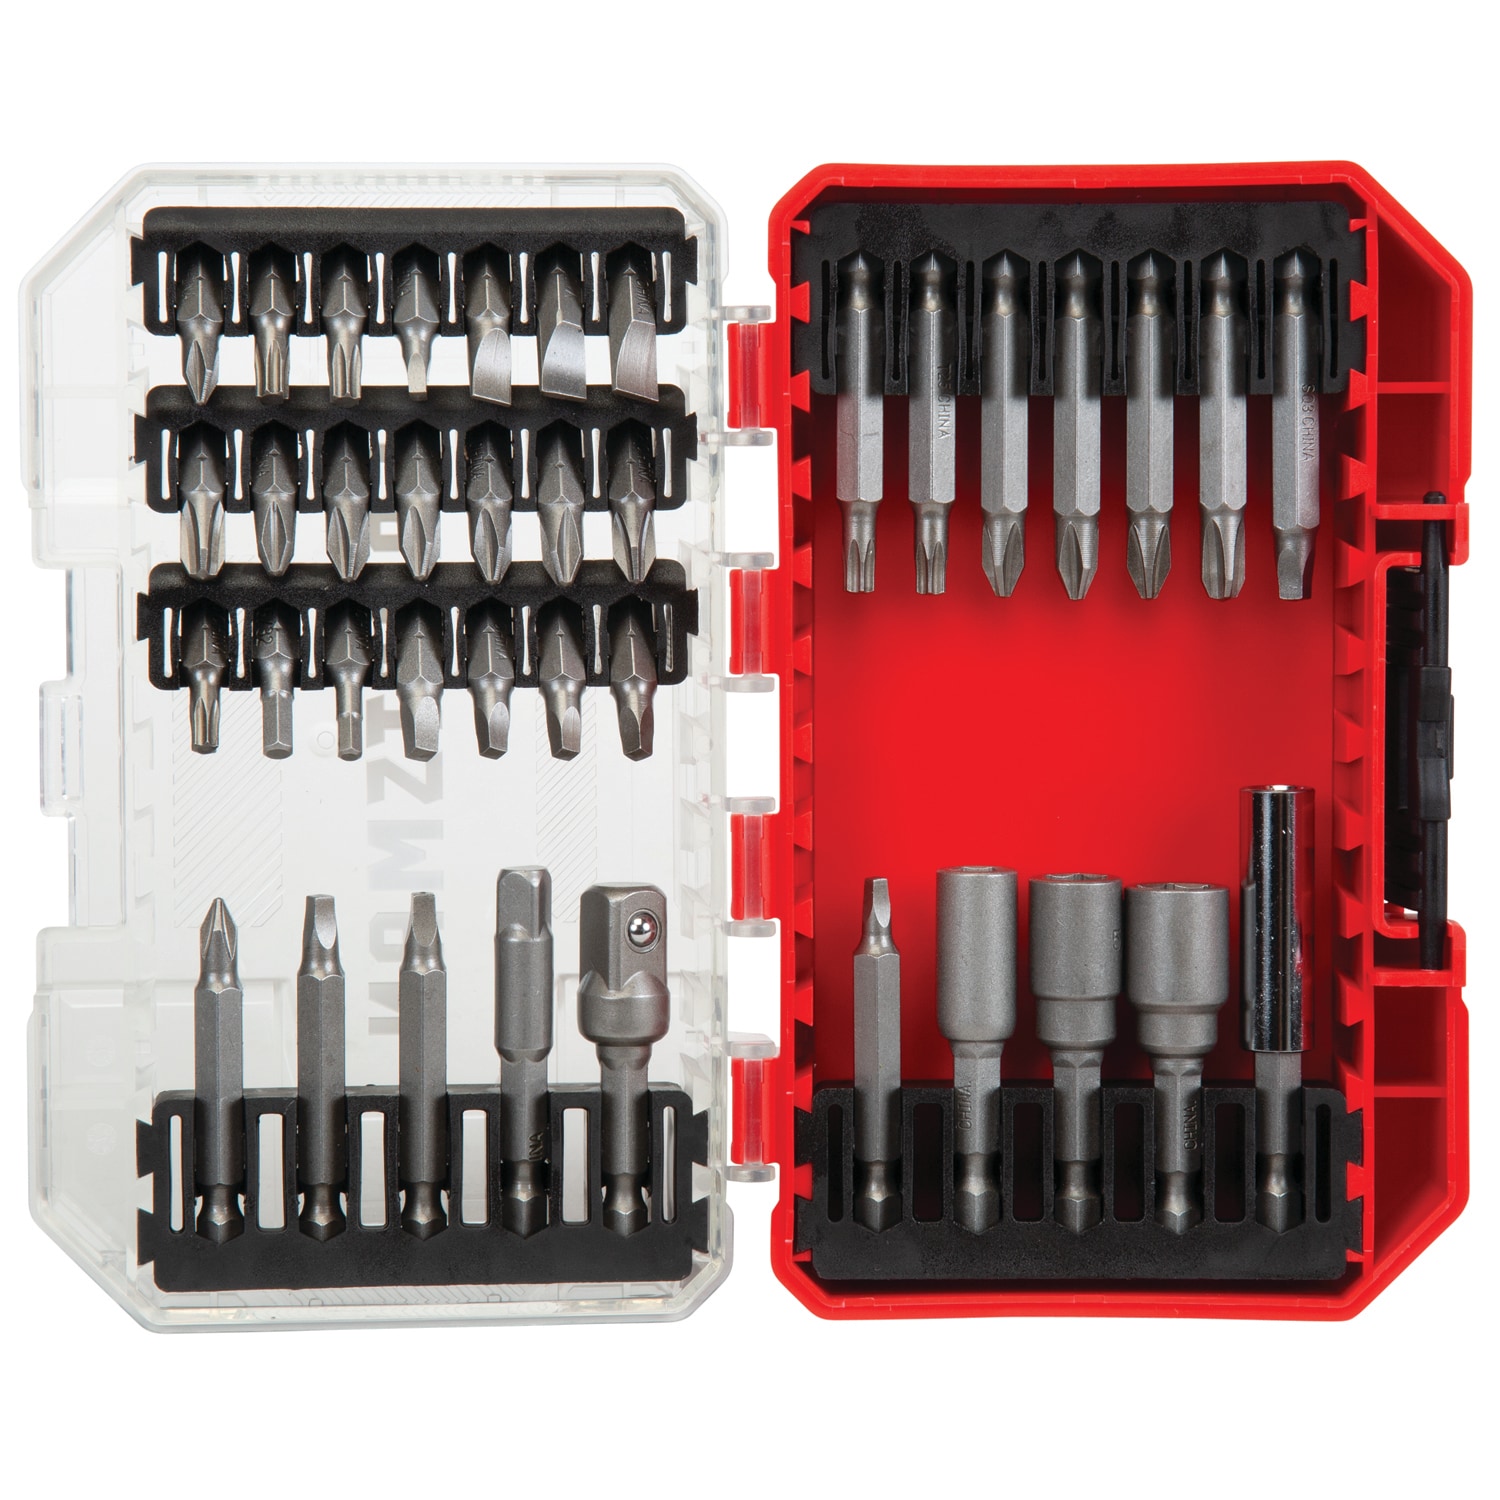 Precision Screwdriver Kit Set, 38 in 1 Small Magnetic Driver Bits Set